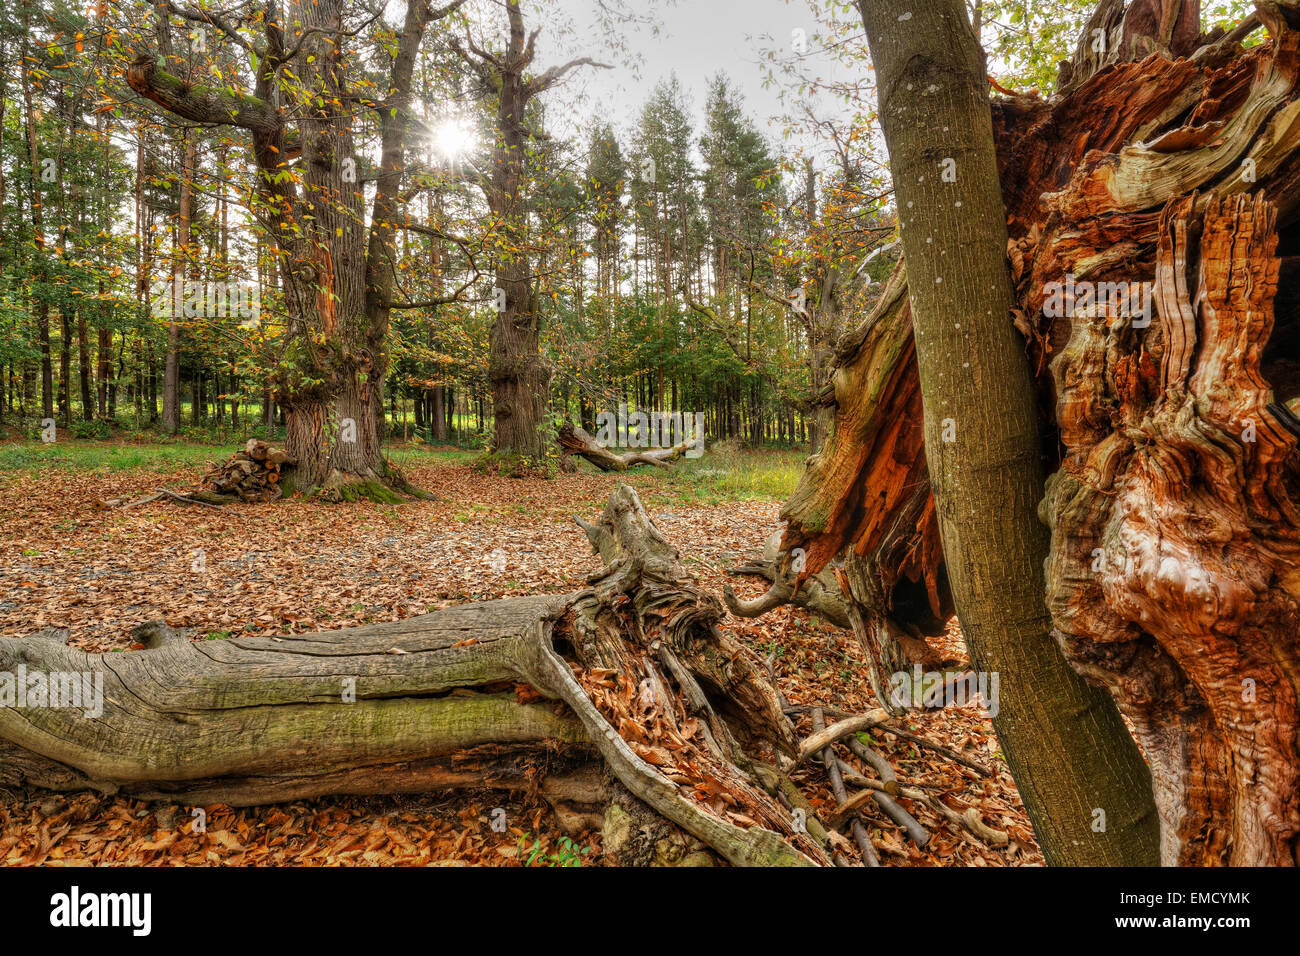 Austria, Burgenland, Liebing chestnut trees Stock Photo